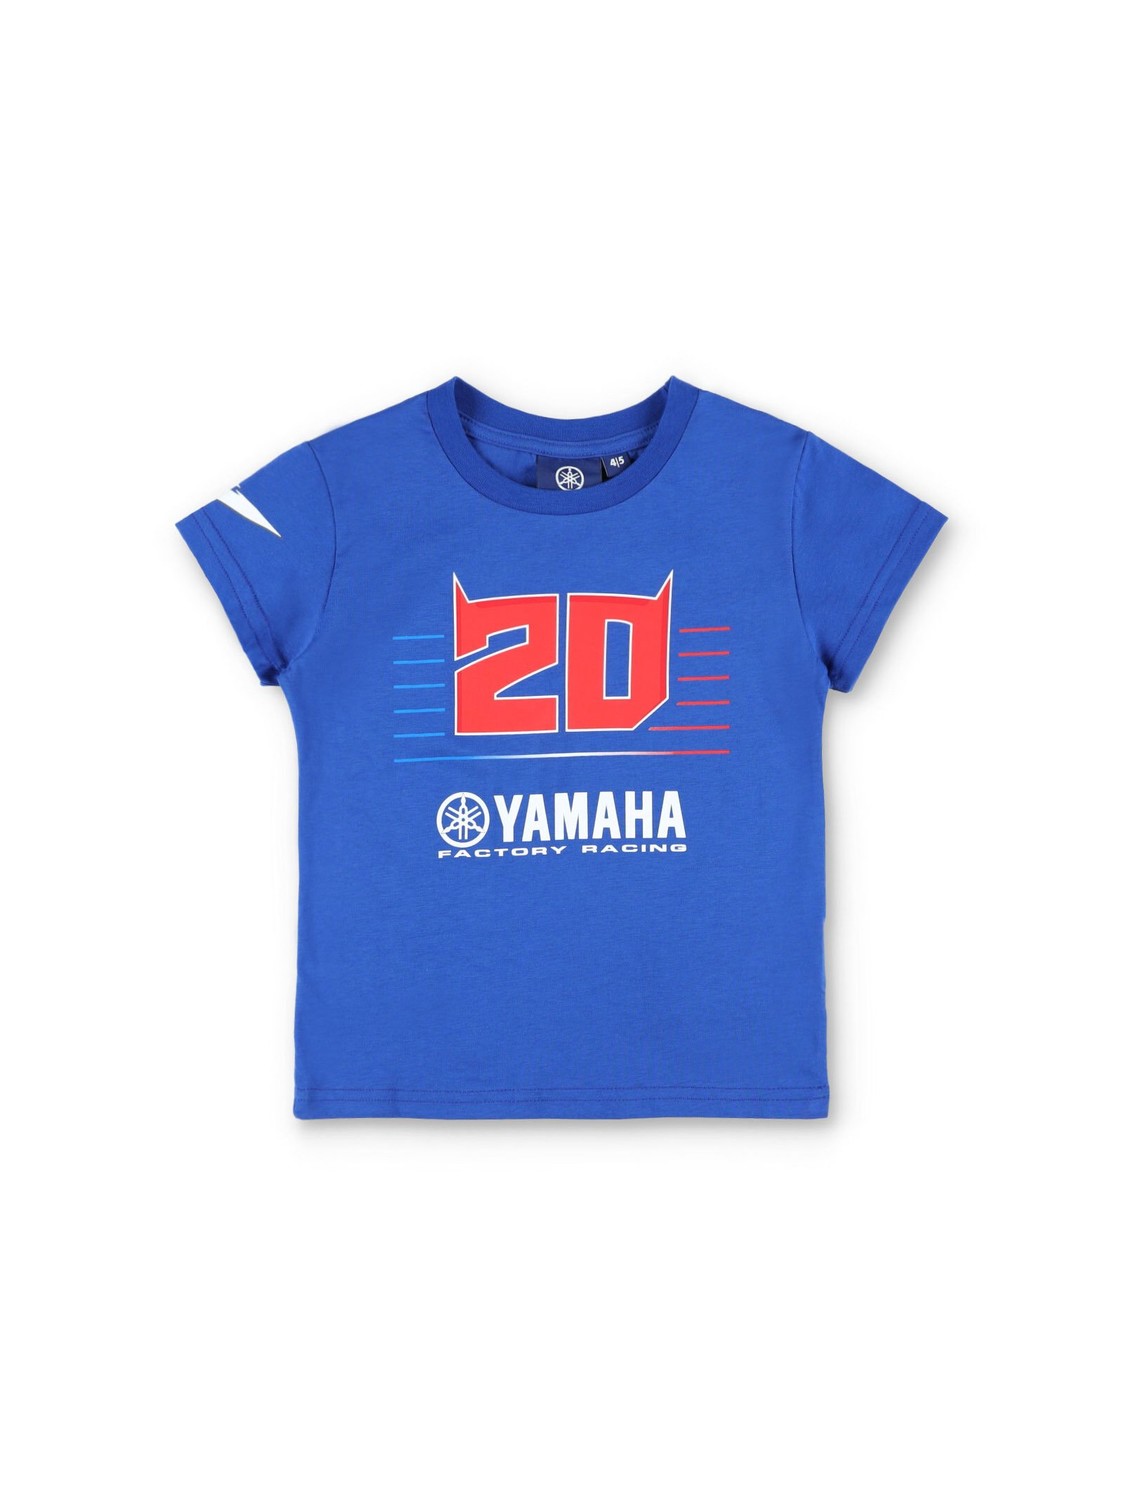 GP Racing Apparel Dětské triko Fabio Quartararo Yamaha MotoGP Logo modré 6-7 let